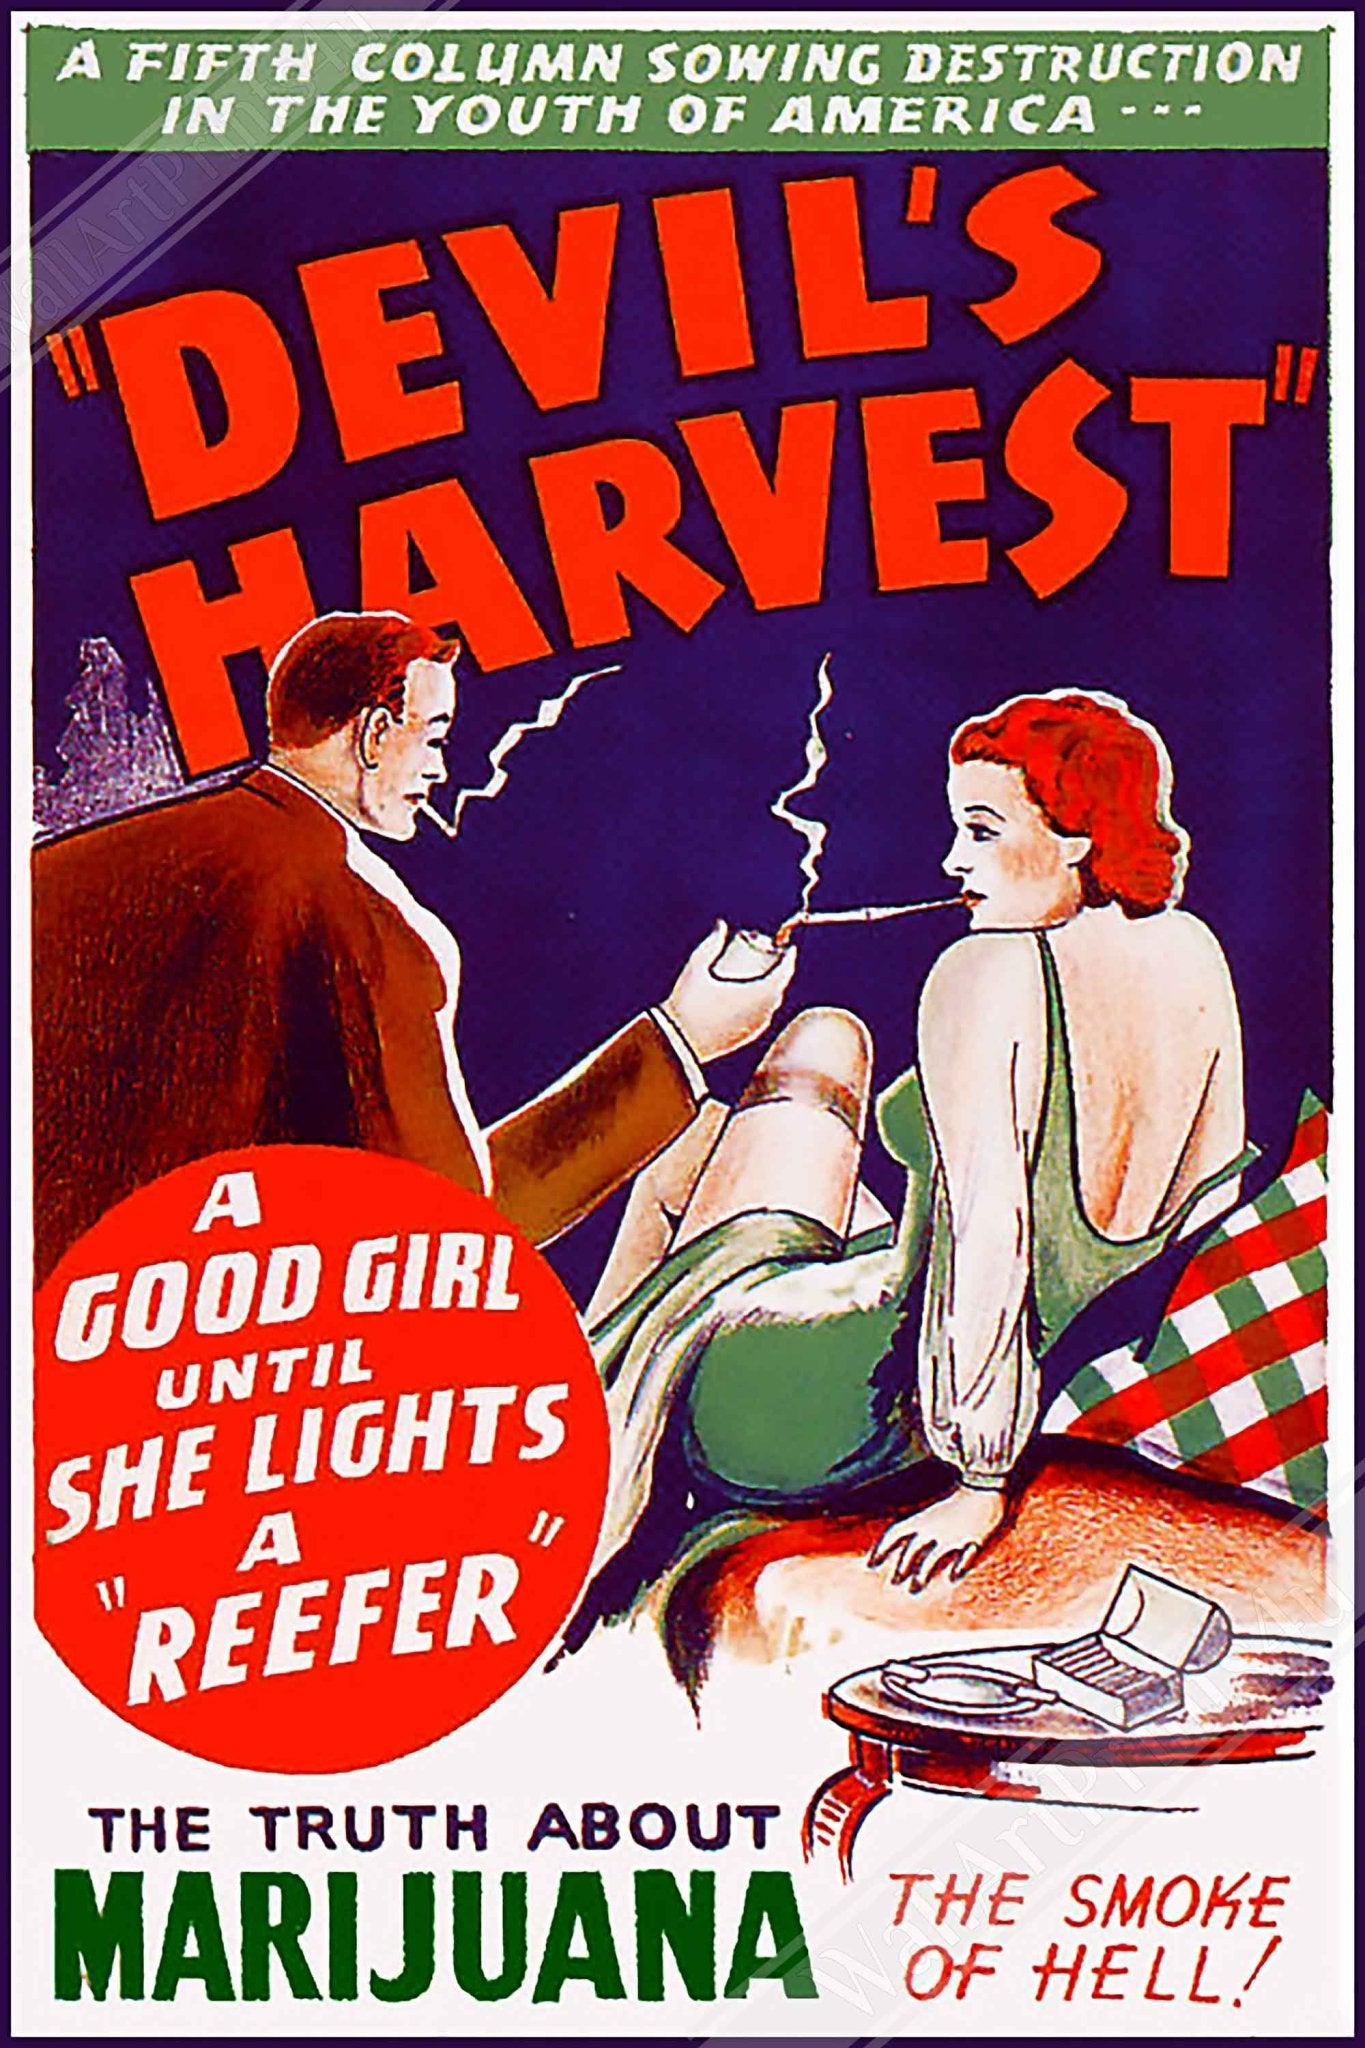 Devils Harvest Propaganda Canvas, "Scary" Cannabis Propaganda - Marijuana Propaganda Canvas Print - WallArtPrints4U